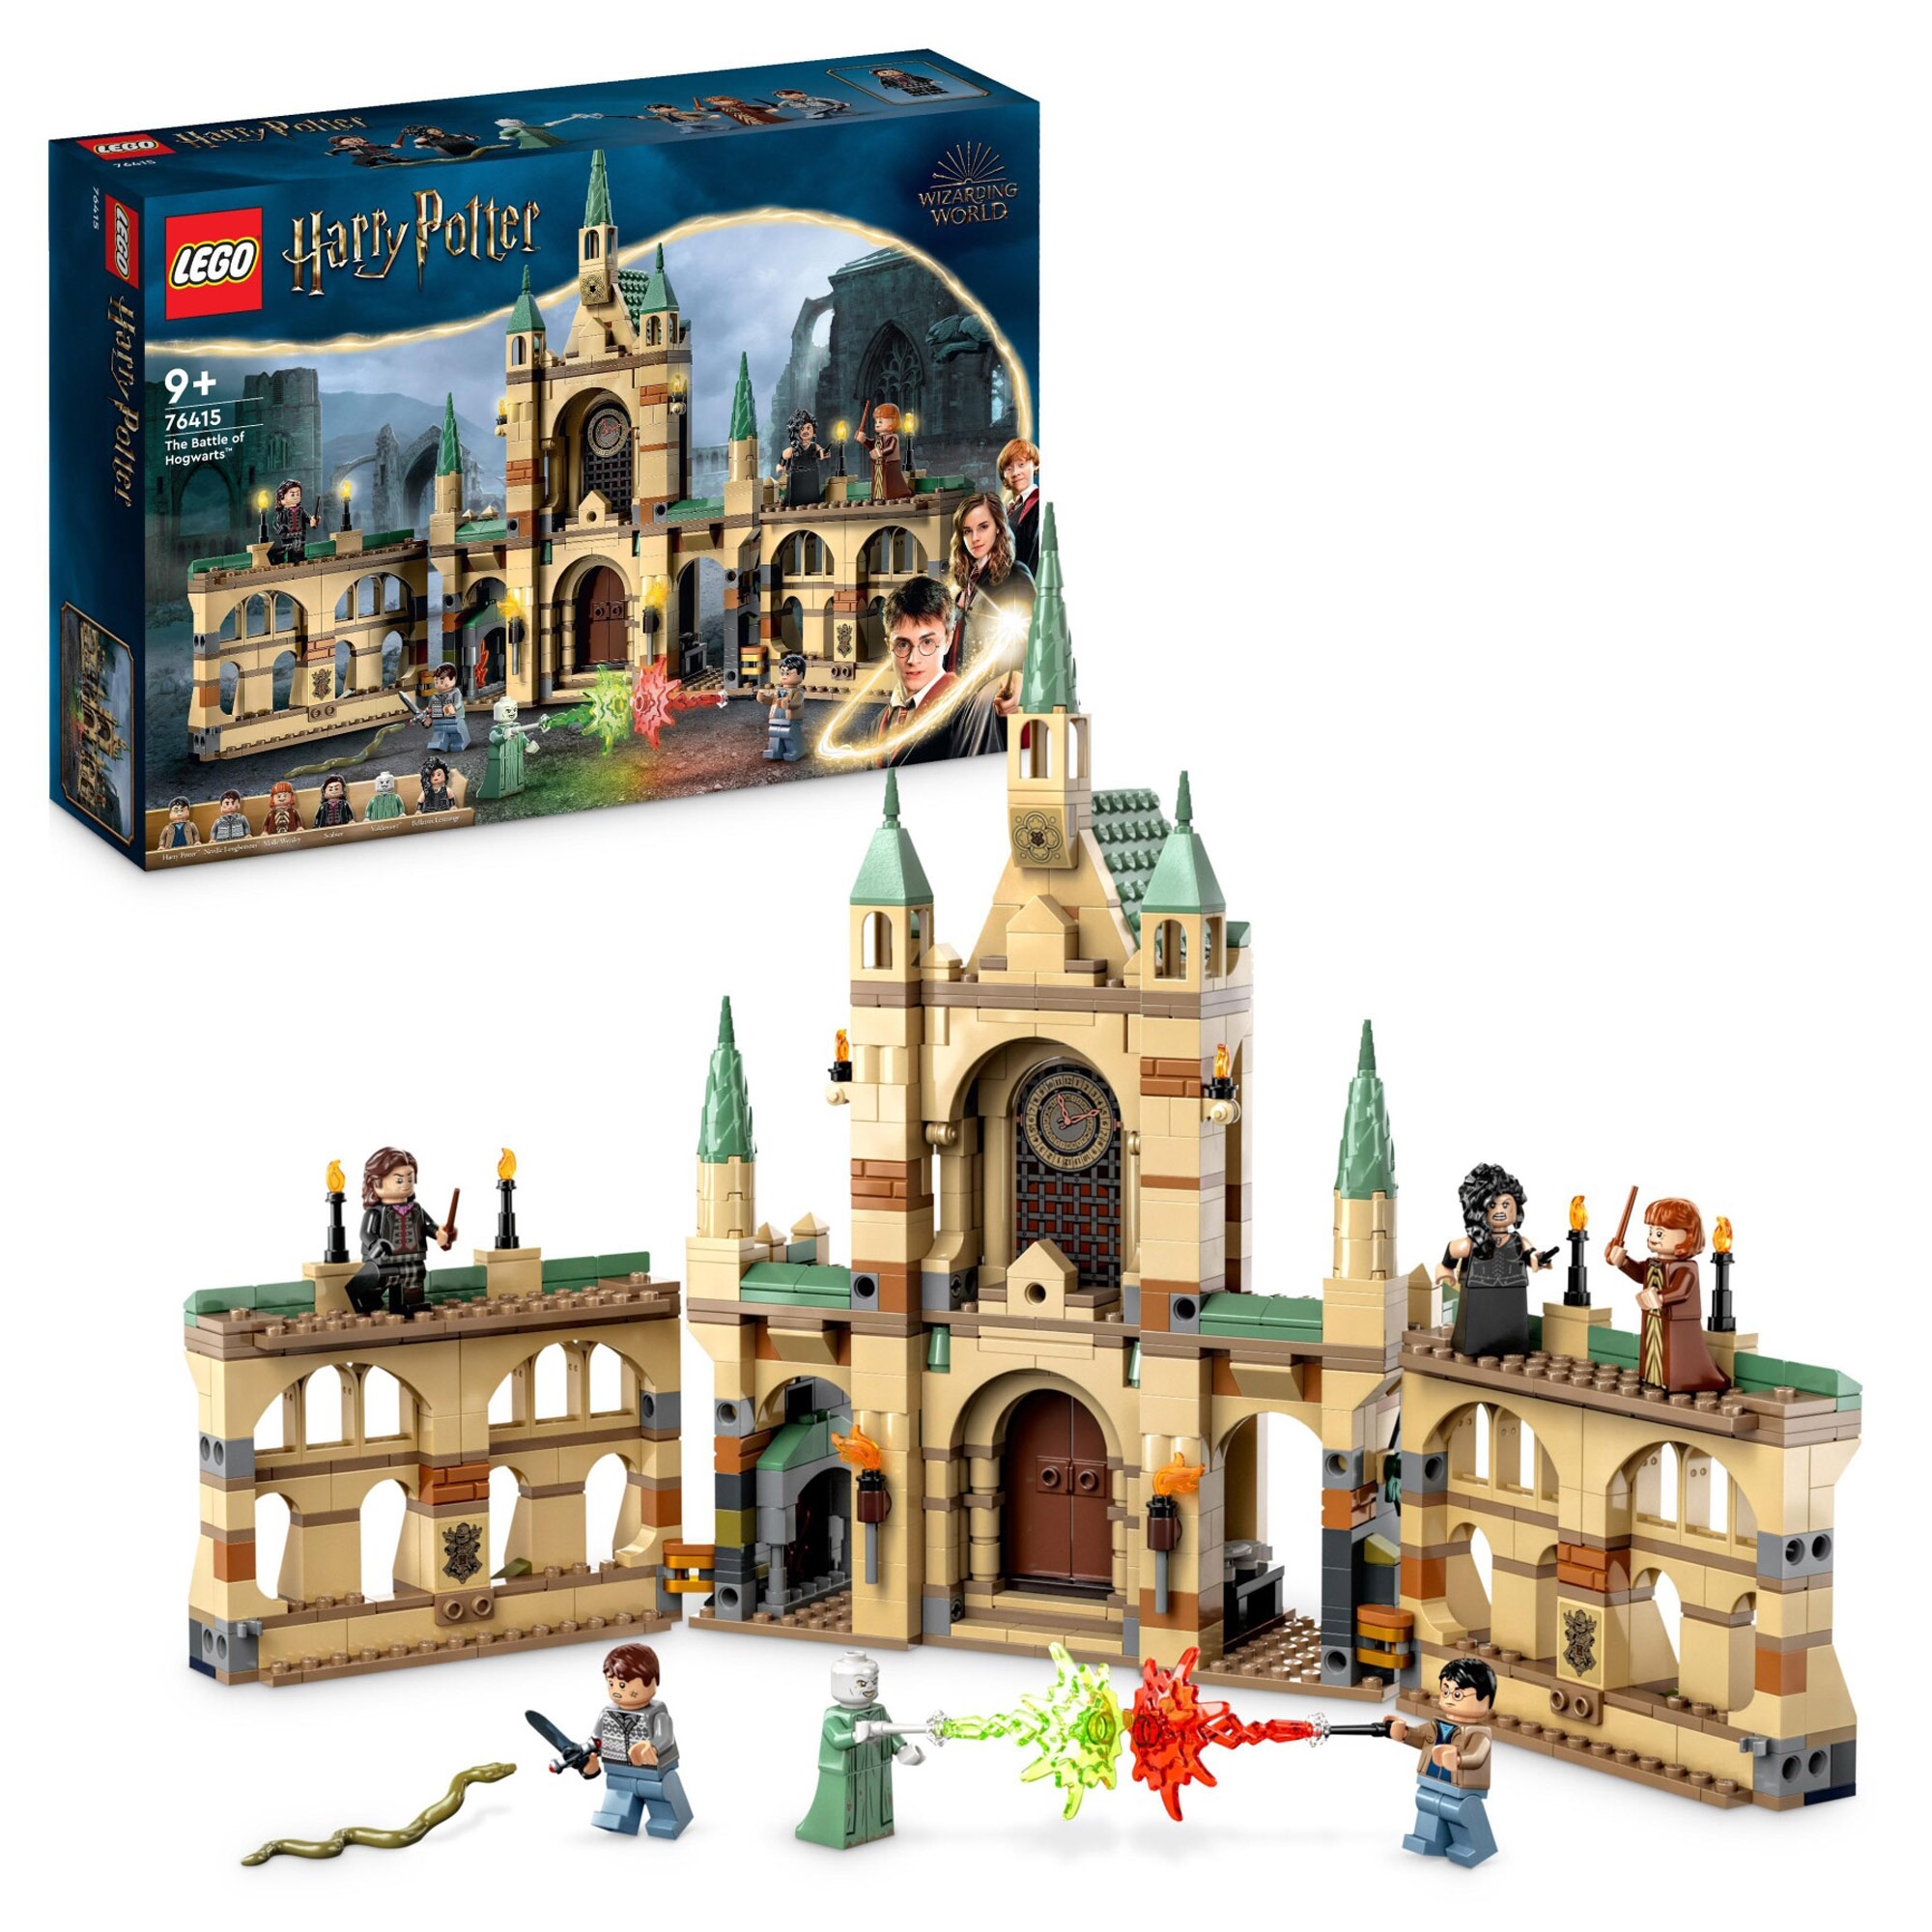 LEGO Harry Potter 76415 La battaglia di Hogwarts, castello con minifigures - Harry Potter, LEGO